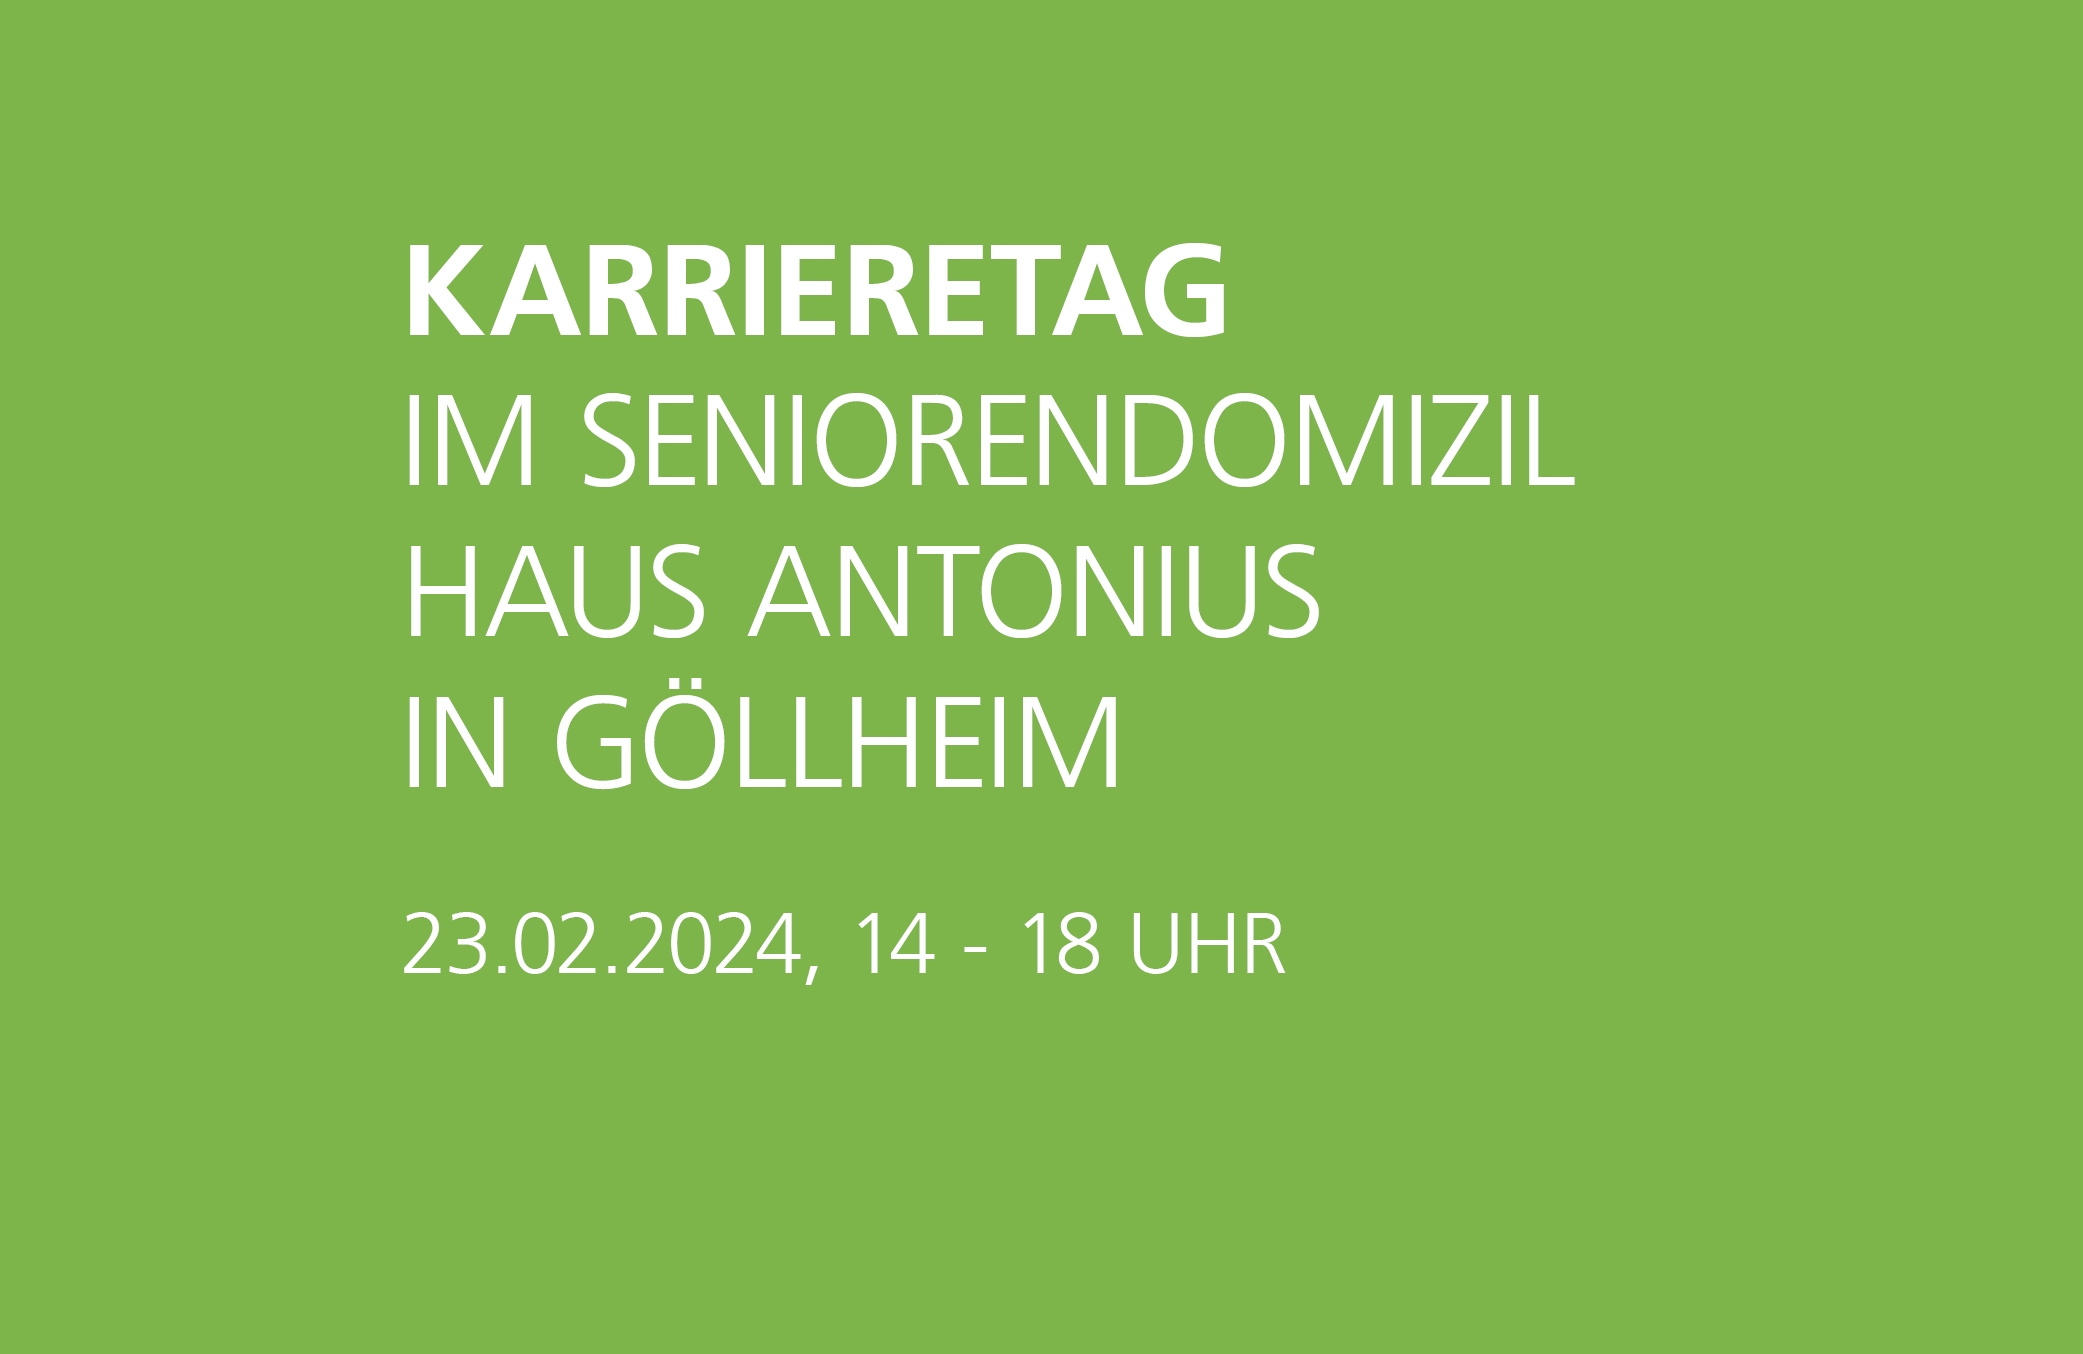 Seniorendomizil-Haus-Antonius-Göllheim-Karrieretag